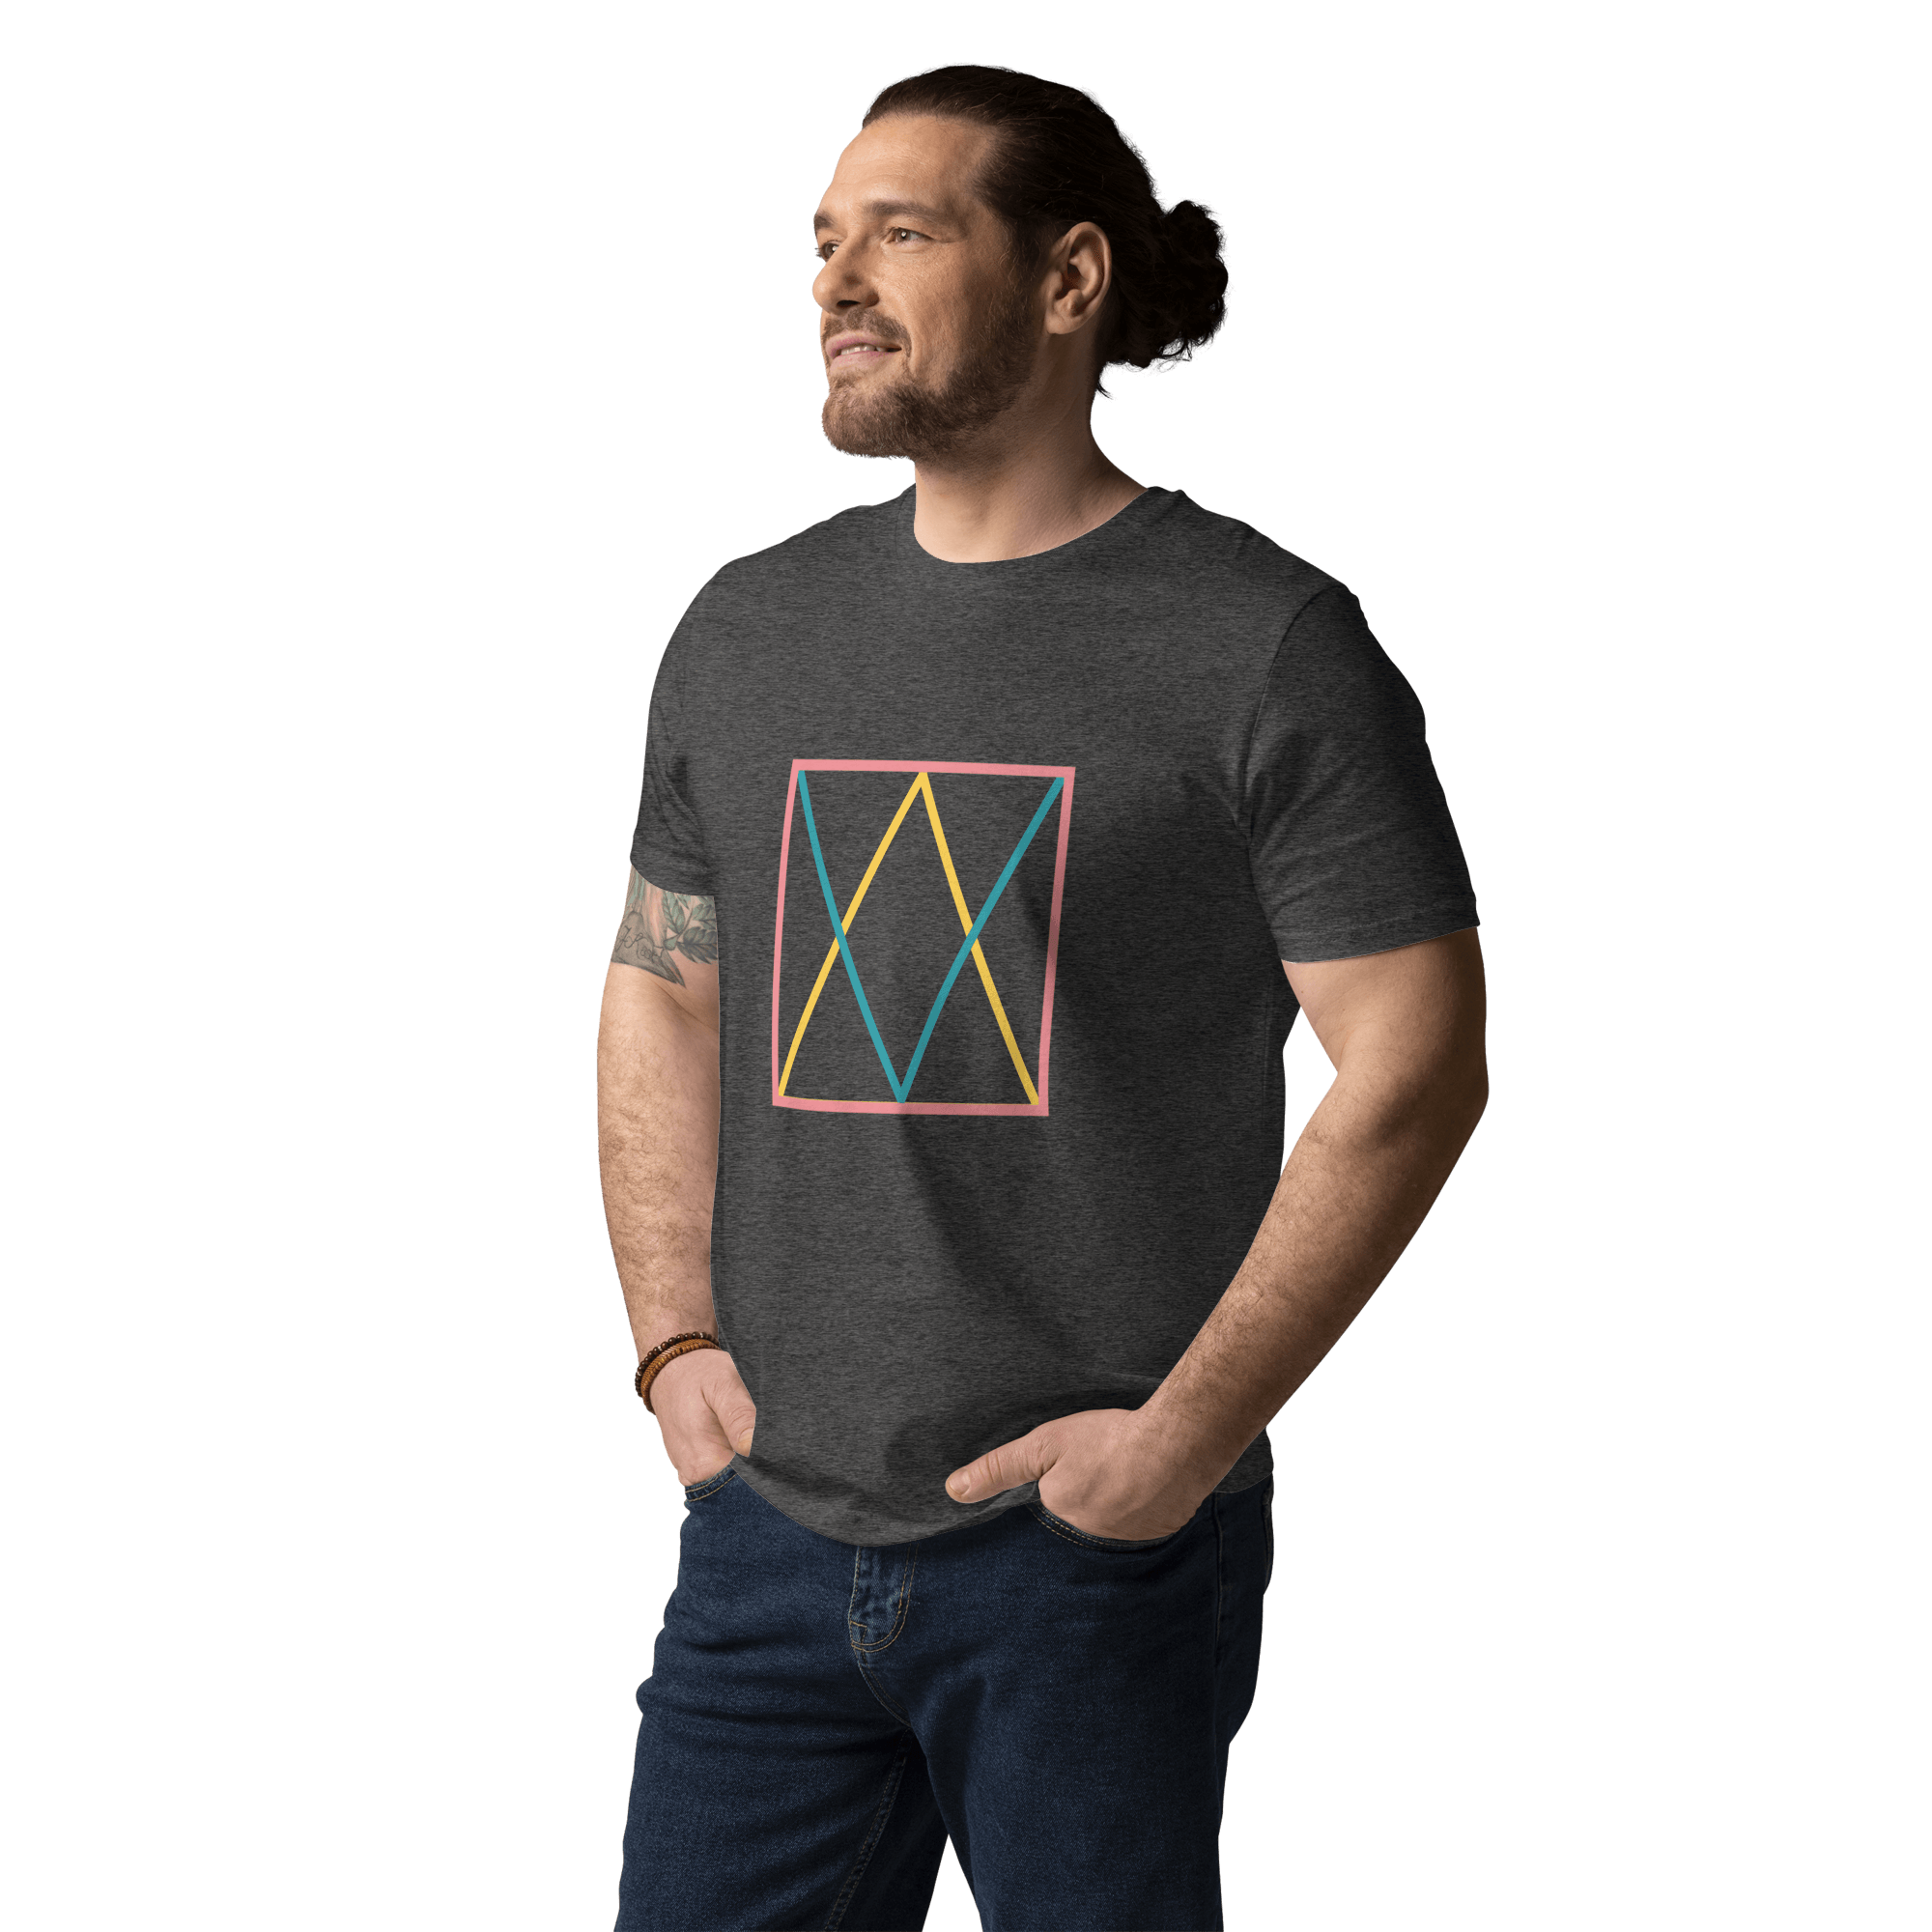 Squared Triangle T-Shirt | Shirts & Tops | pitod.com